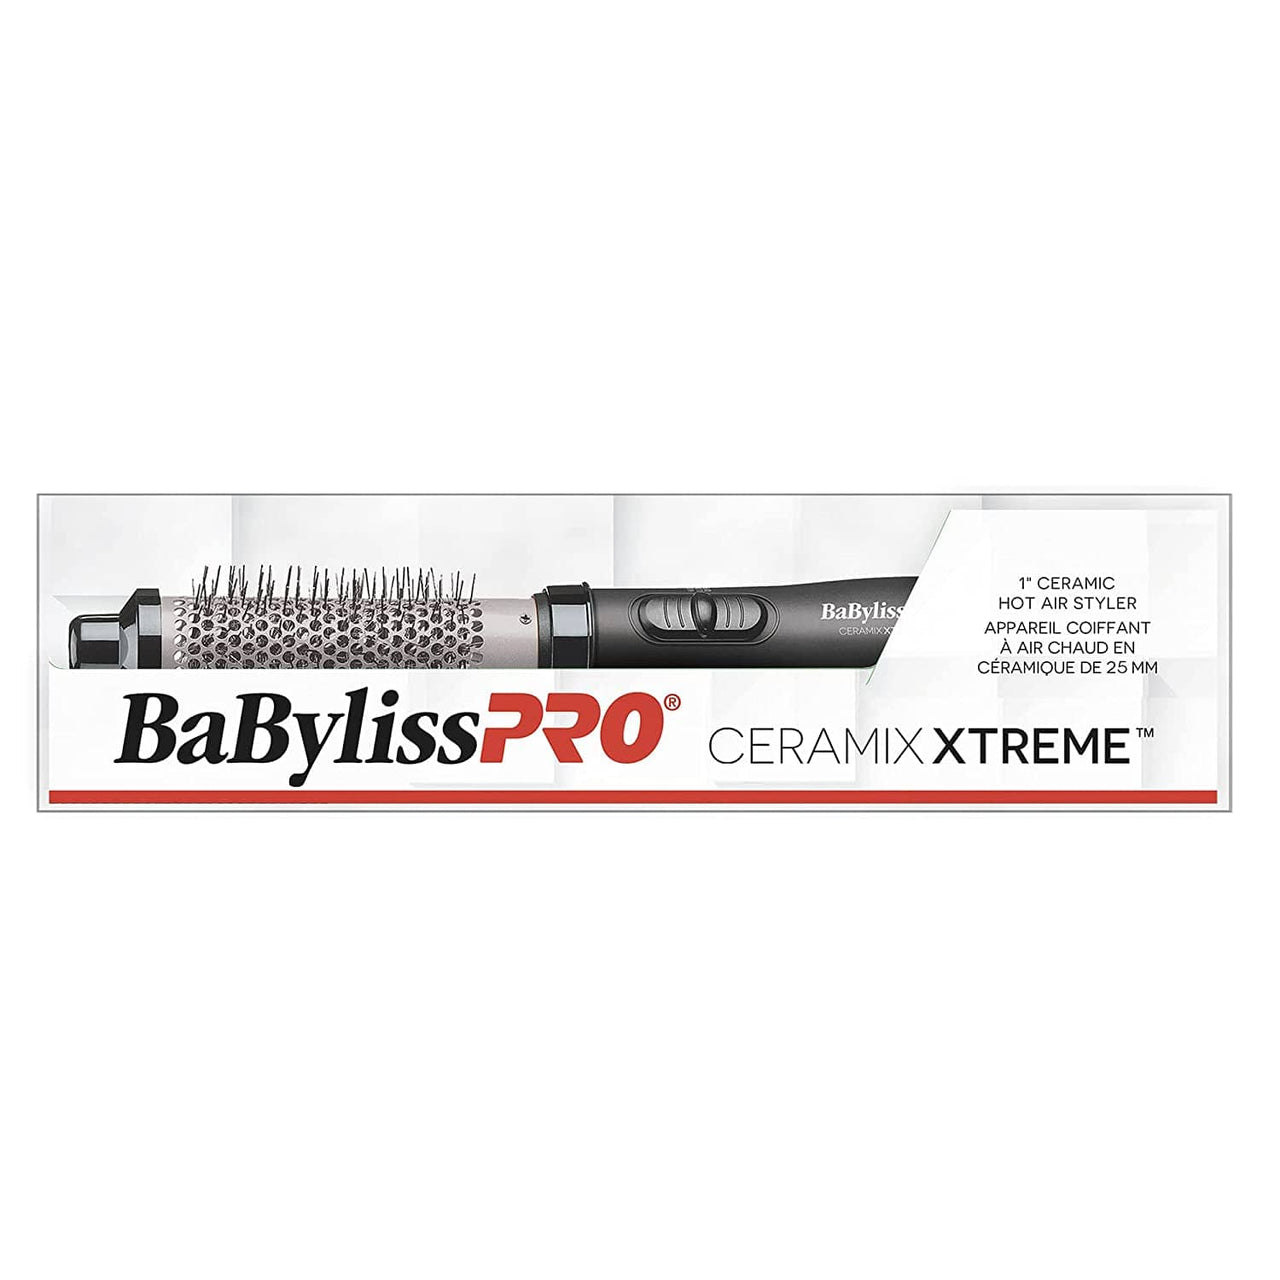 BABYLISS PRO_Ceramix Xtreme 1" Ceramic Hot Air Styler - BAB21001NC_Cosmetic World